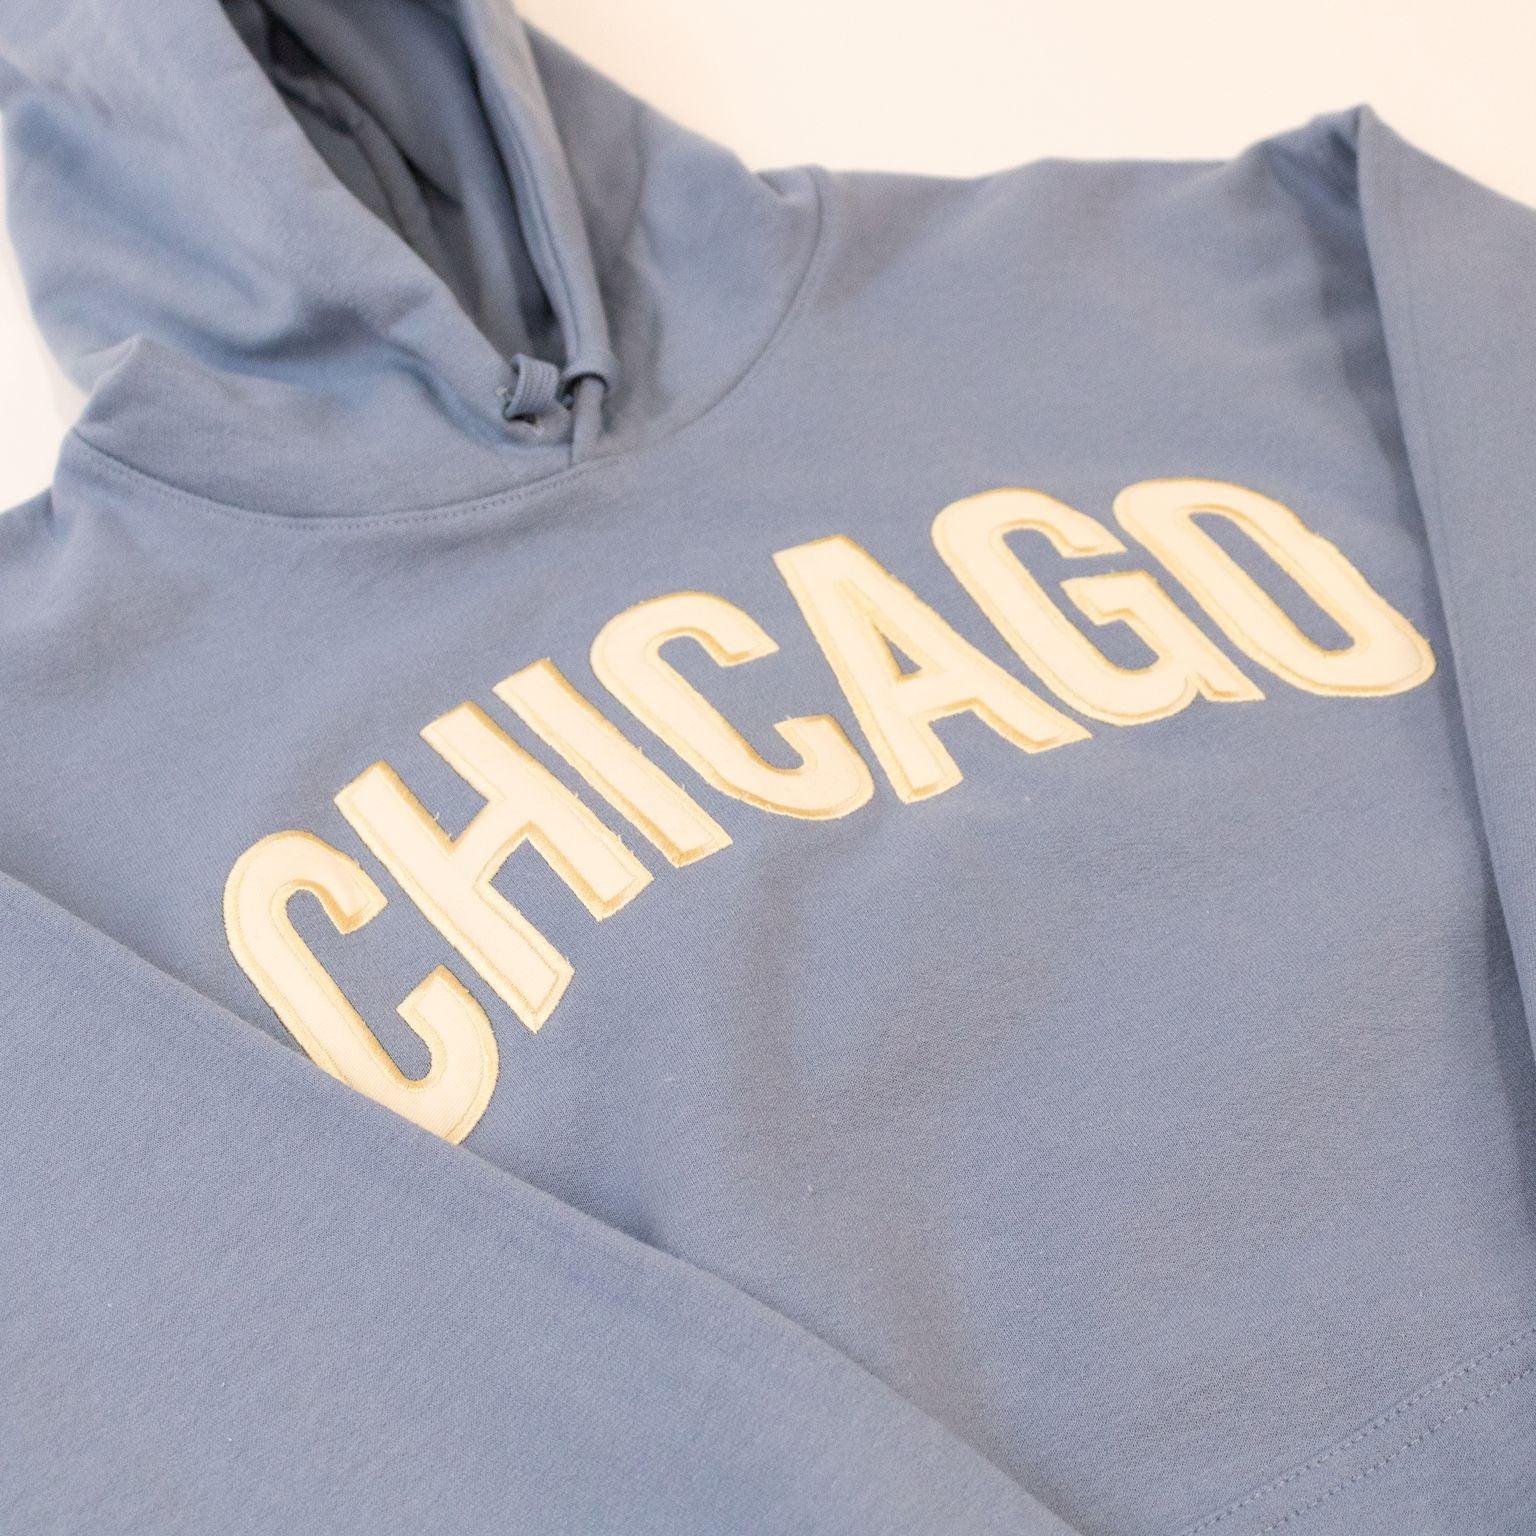 Chicago Absoluteness Sweatshirt